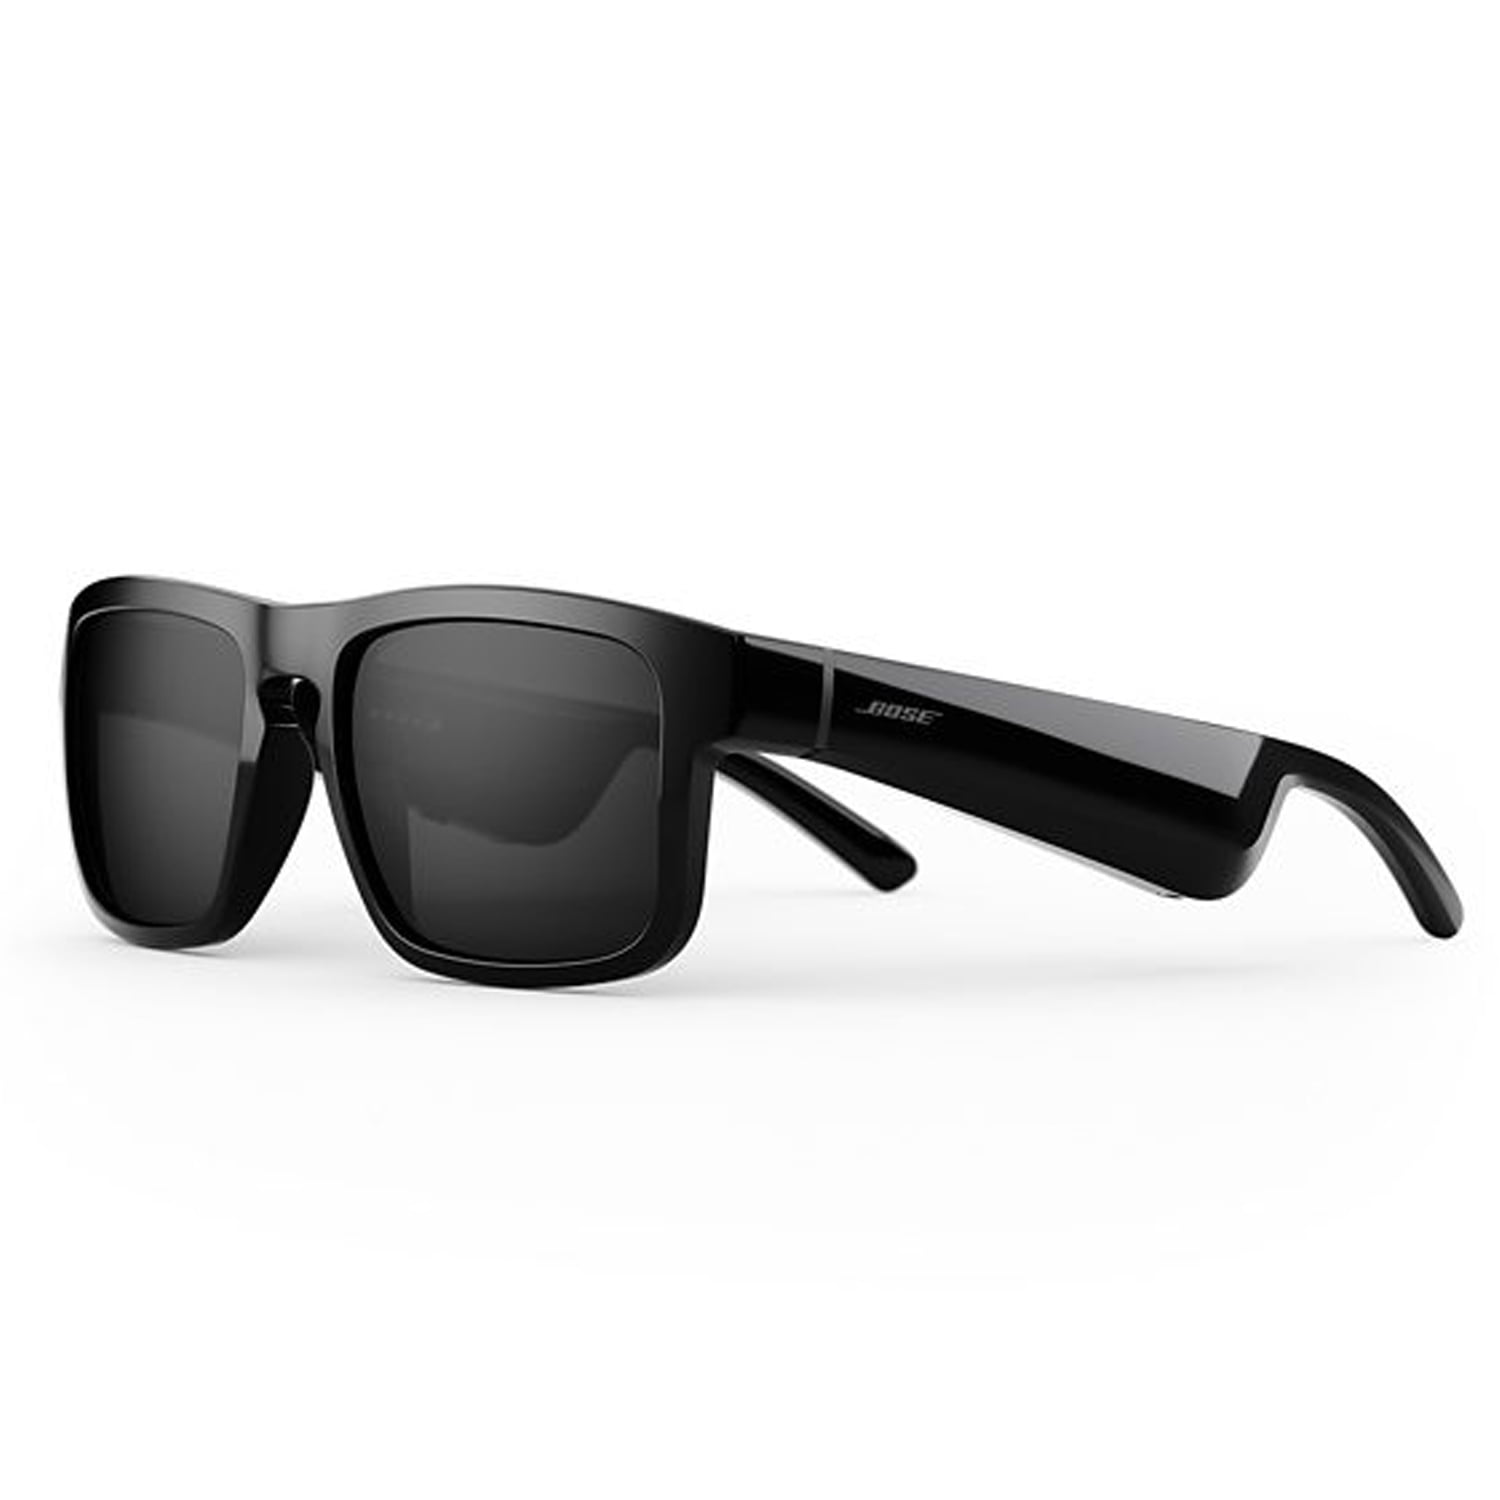 Bluetooth Audio Sunglasses | Bose-hangkhonggiare.com.vn